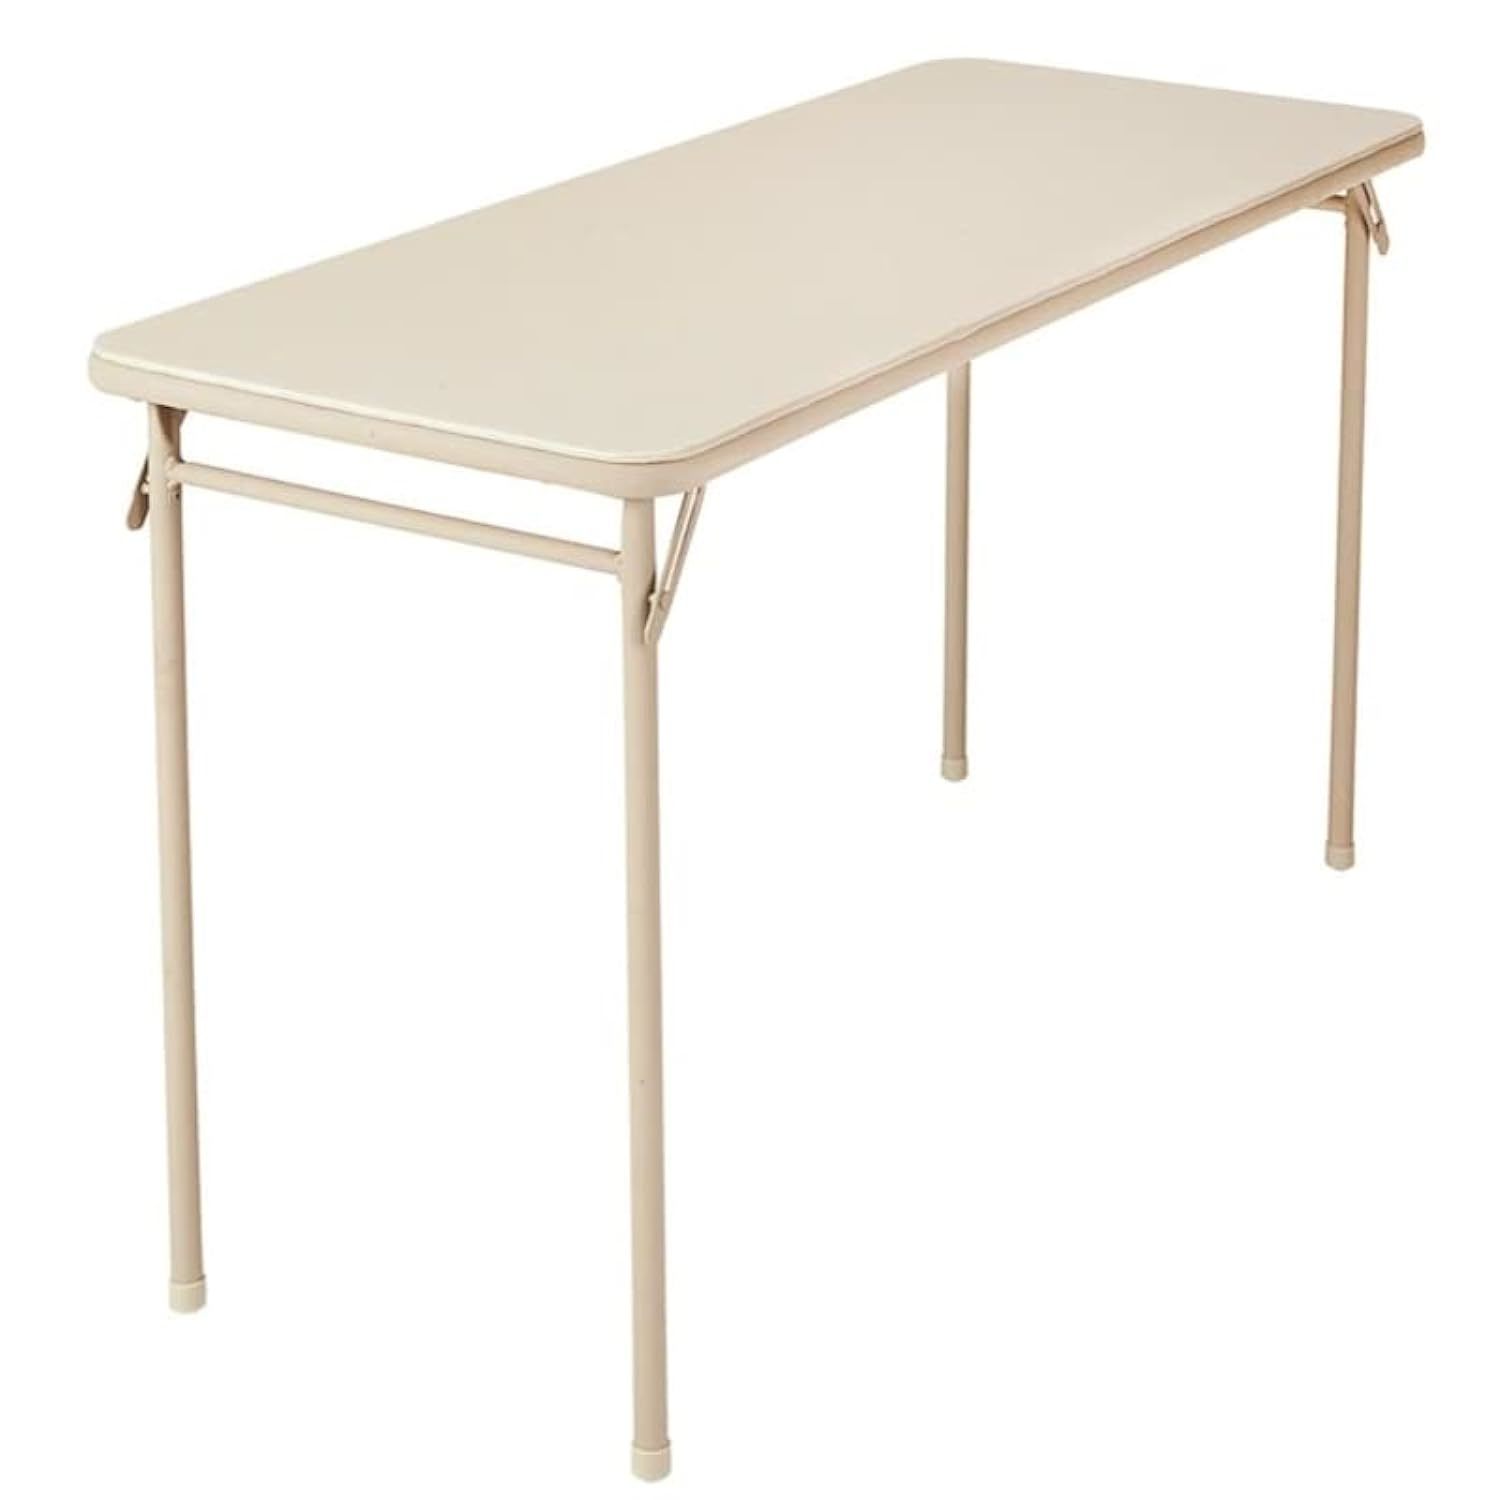 Cosco Folding Serving Table, 20" X 48", Antique Linen - $83.59